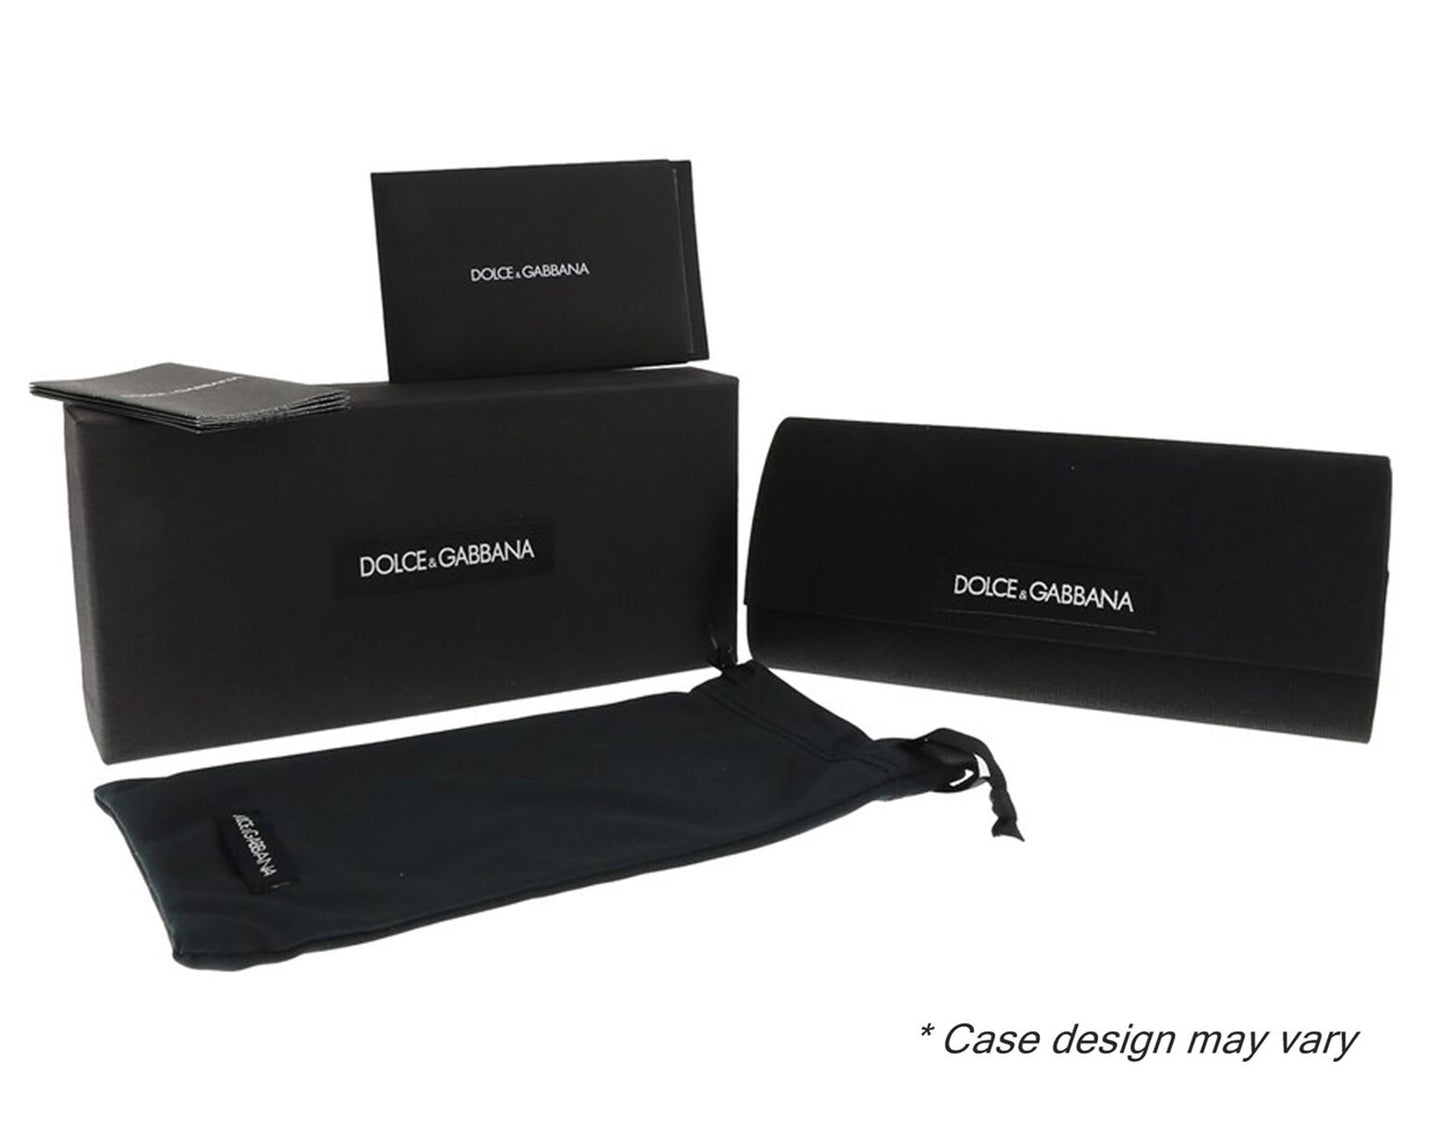 Dolce & Gabbana 0DG4348-316313 54mm New Sunglasses